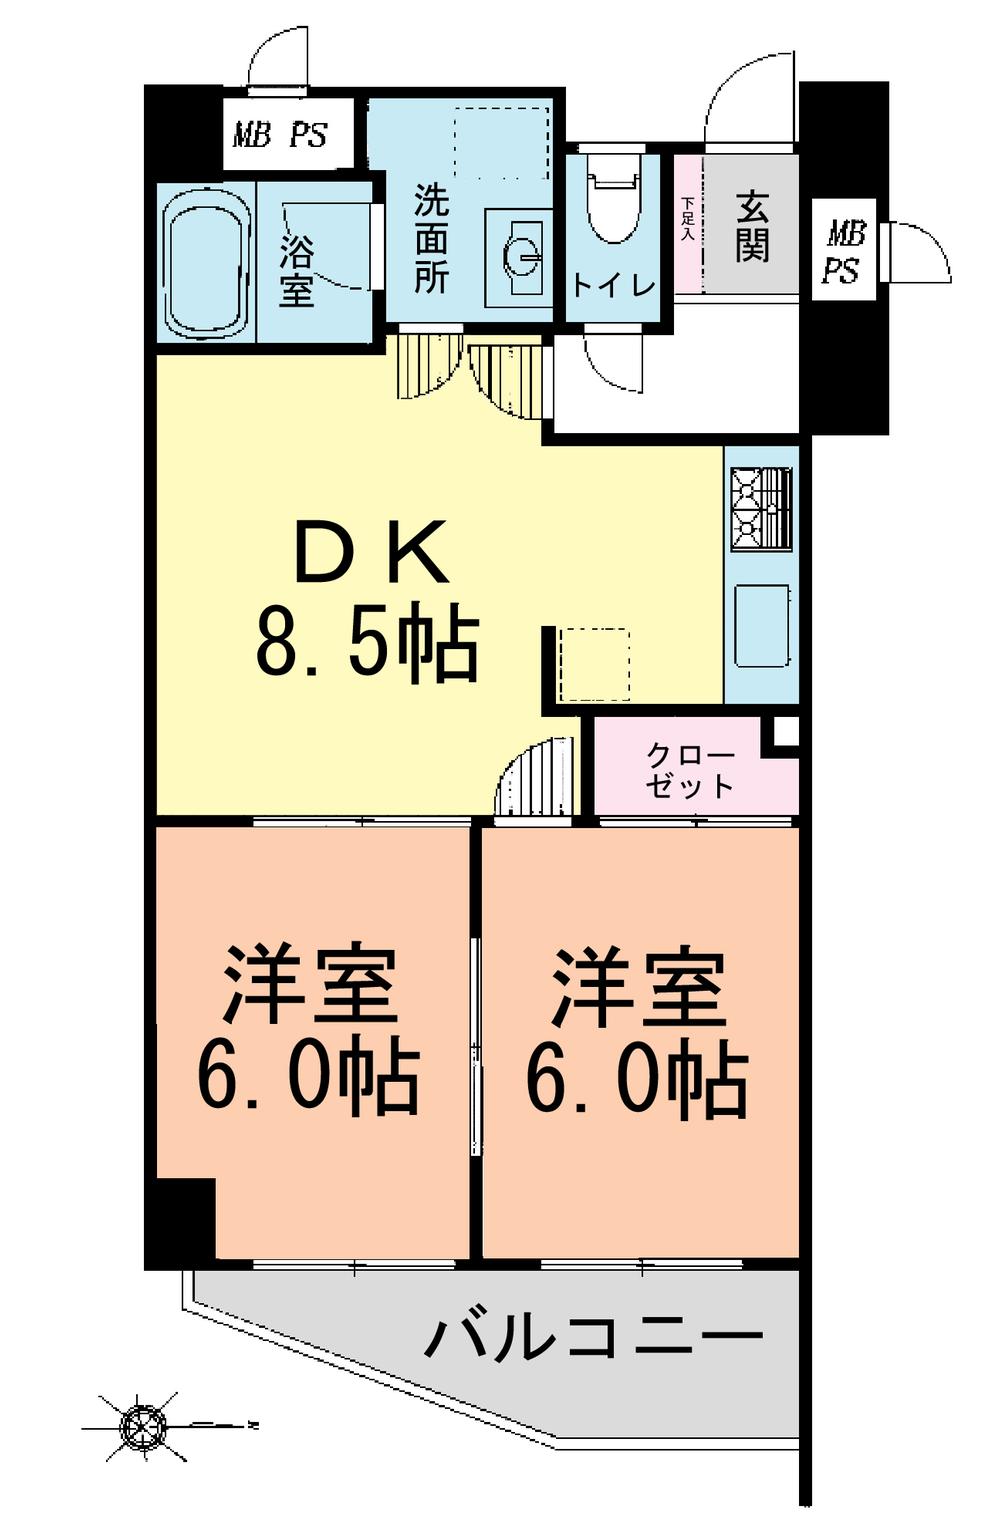 Floor plan. 2DK, Price 17.5 million yen, Occupied area 51.76 sq m , Balcony area 6.02 sq m